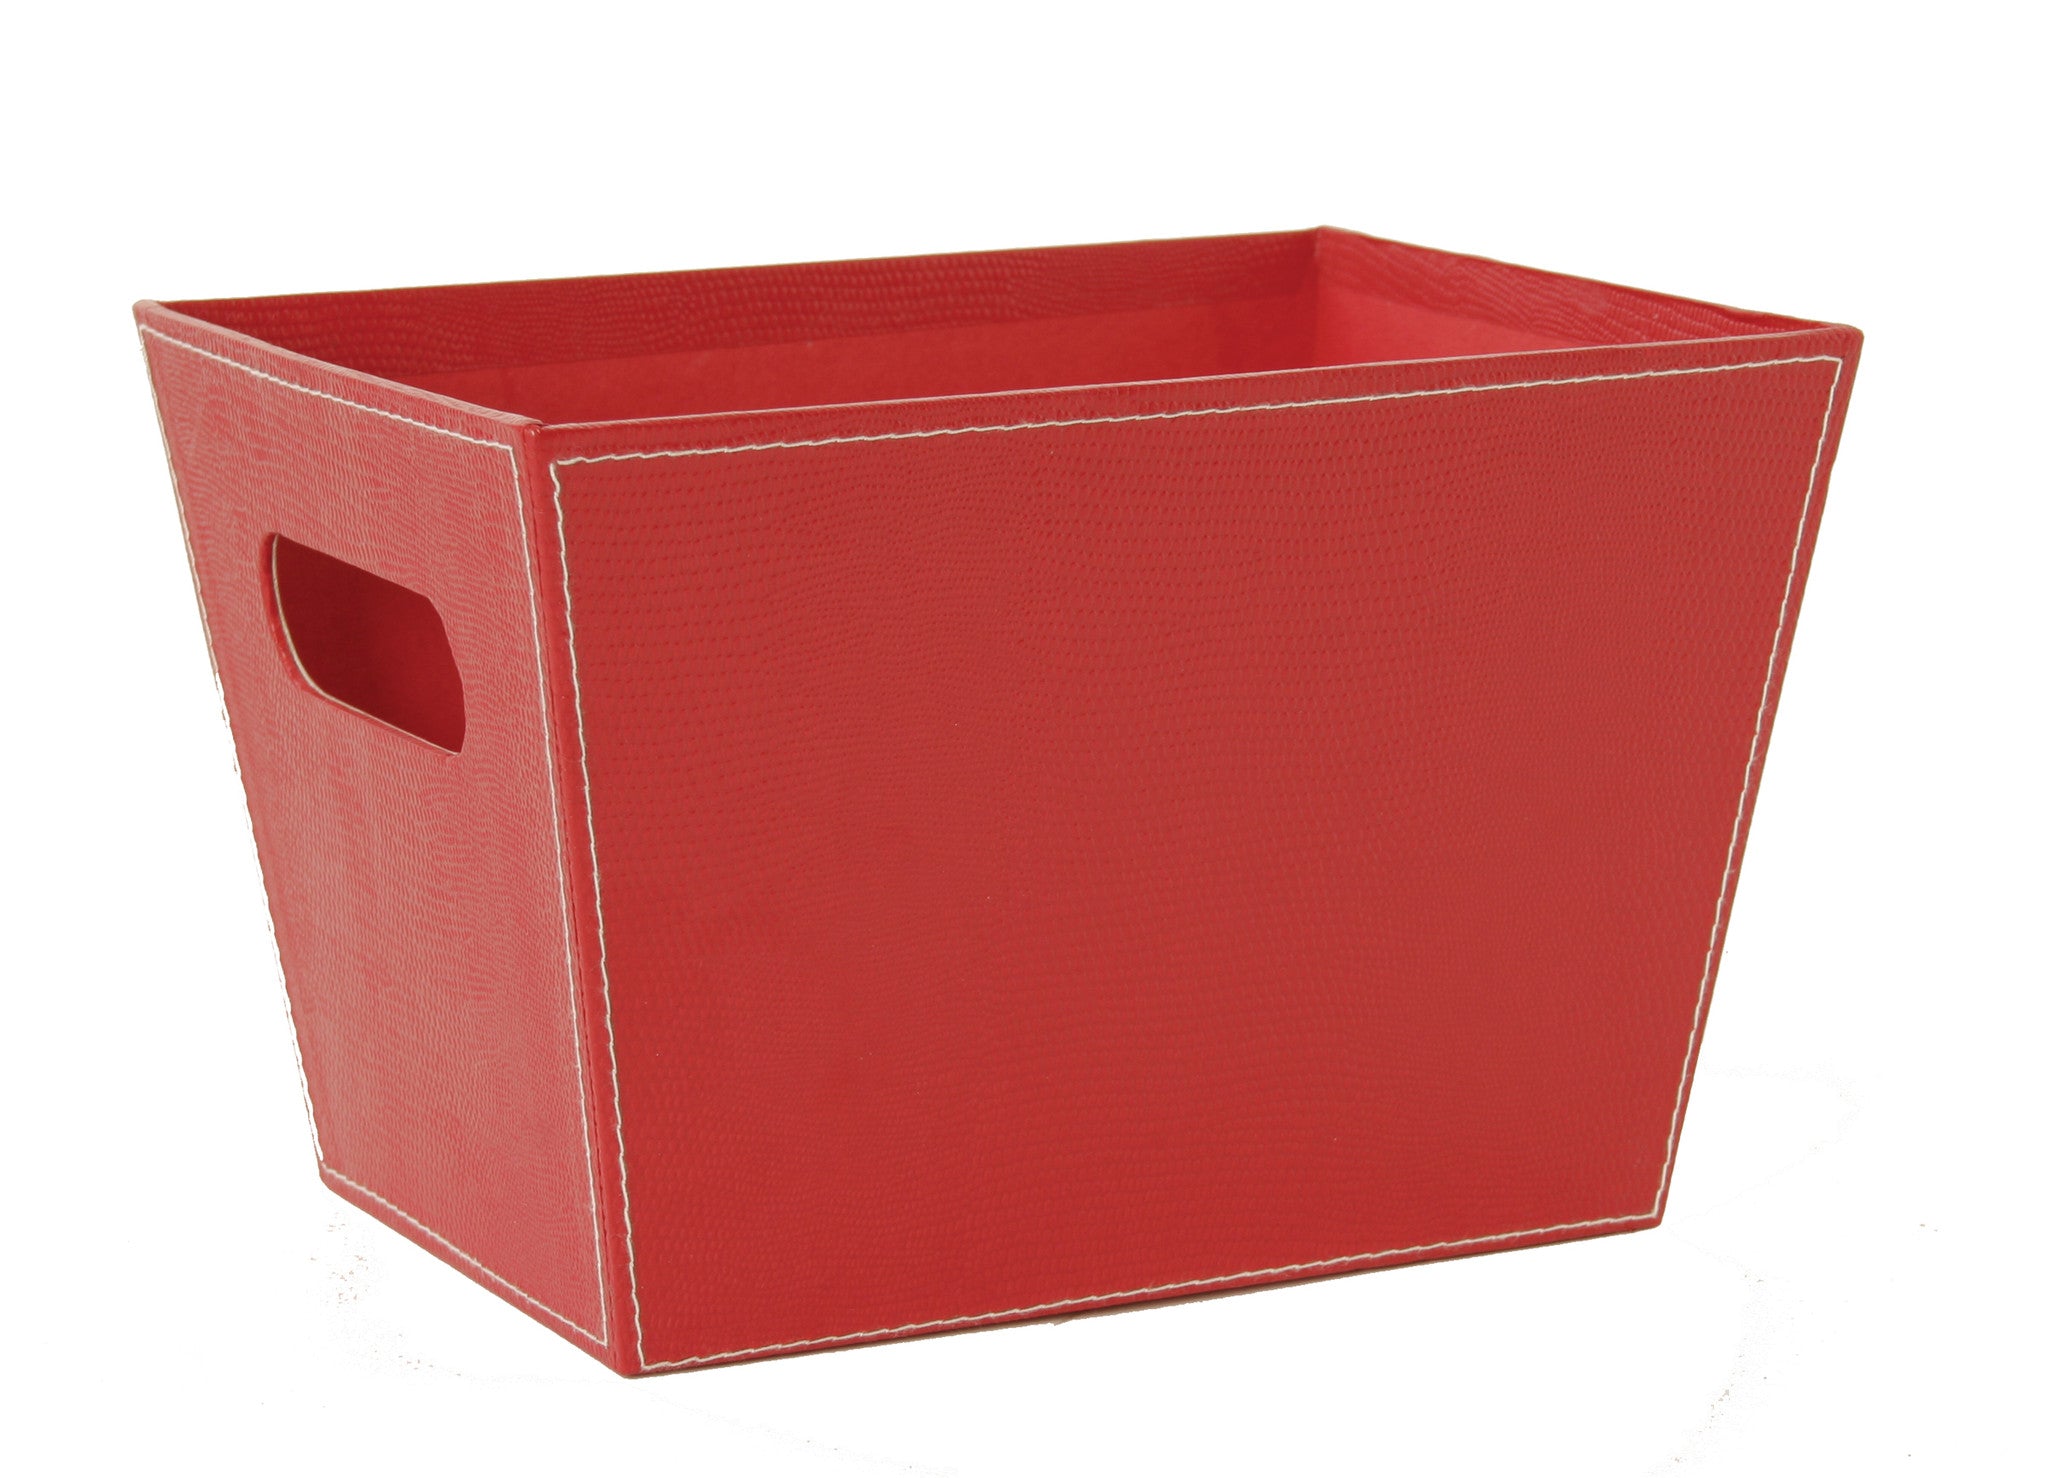 Stackable Storage Bin in Red